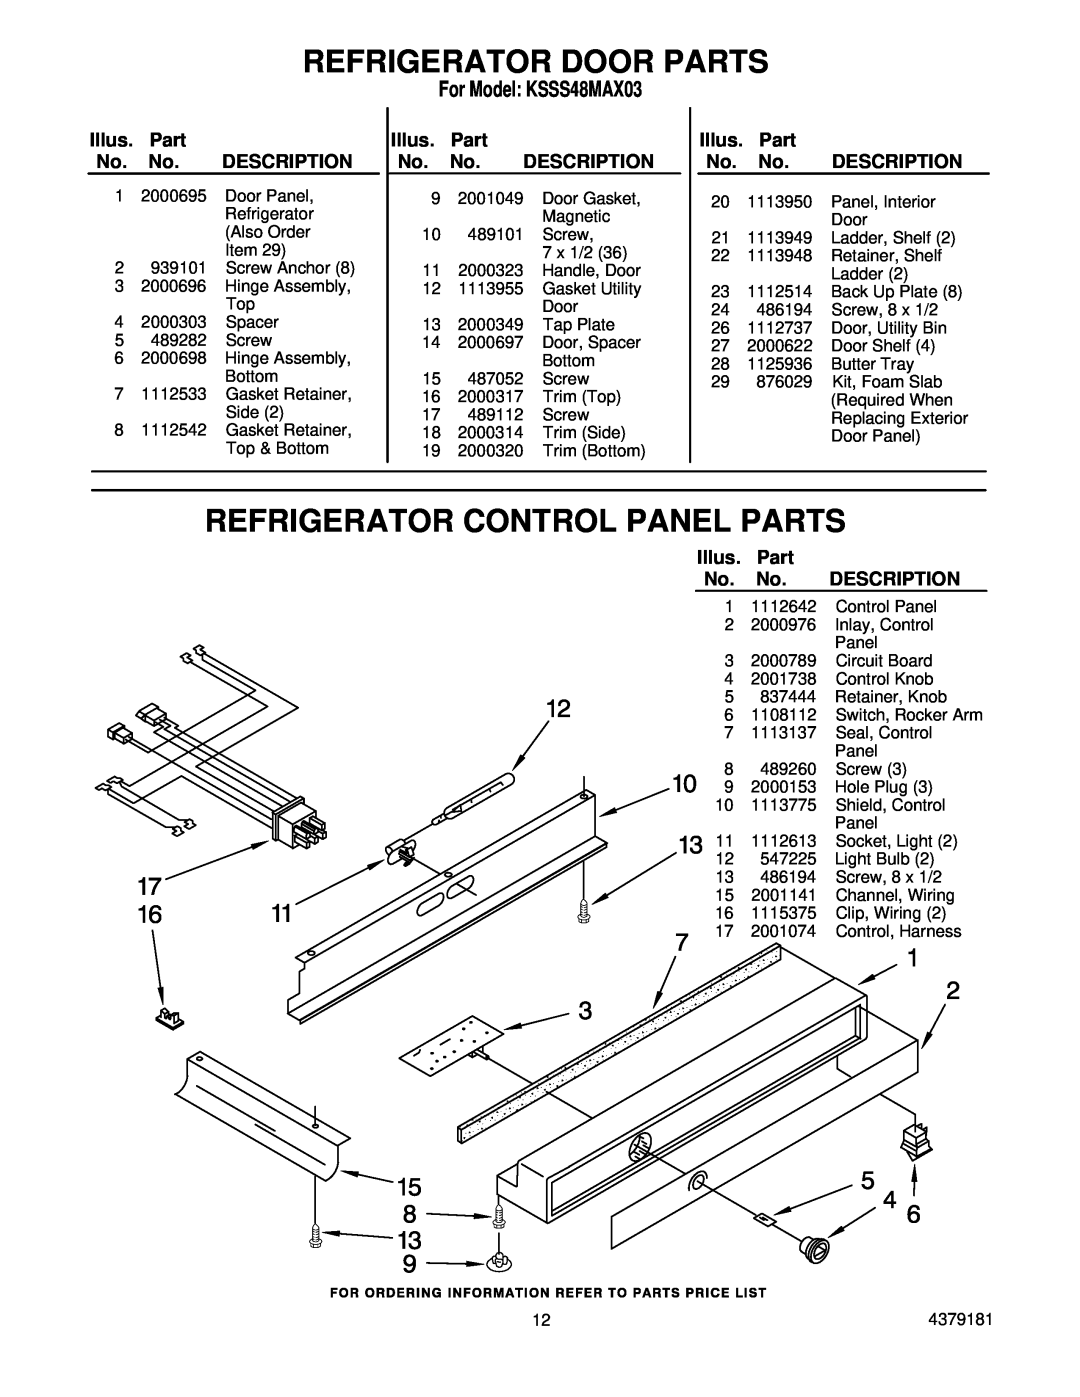 KitchenAid manual Refrigerator Control Panel Parts, Refrigerator Door Parts, For Model KSSS48MAX03, Illus, Description 